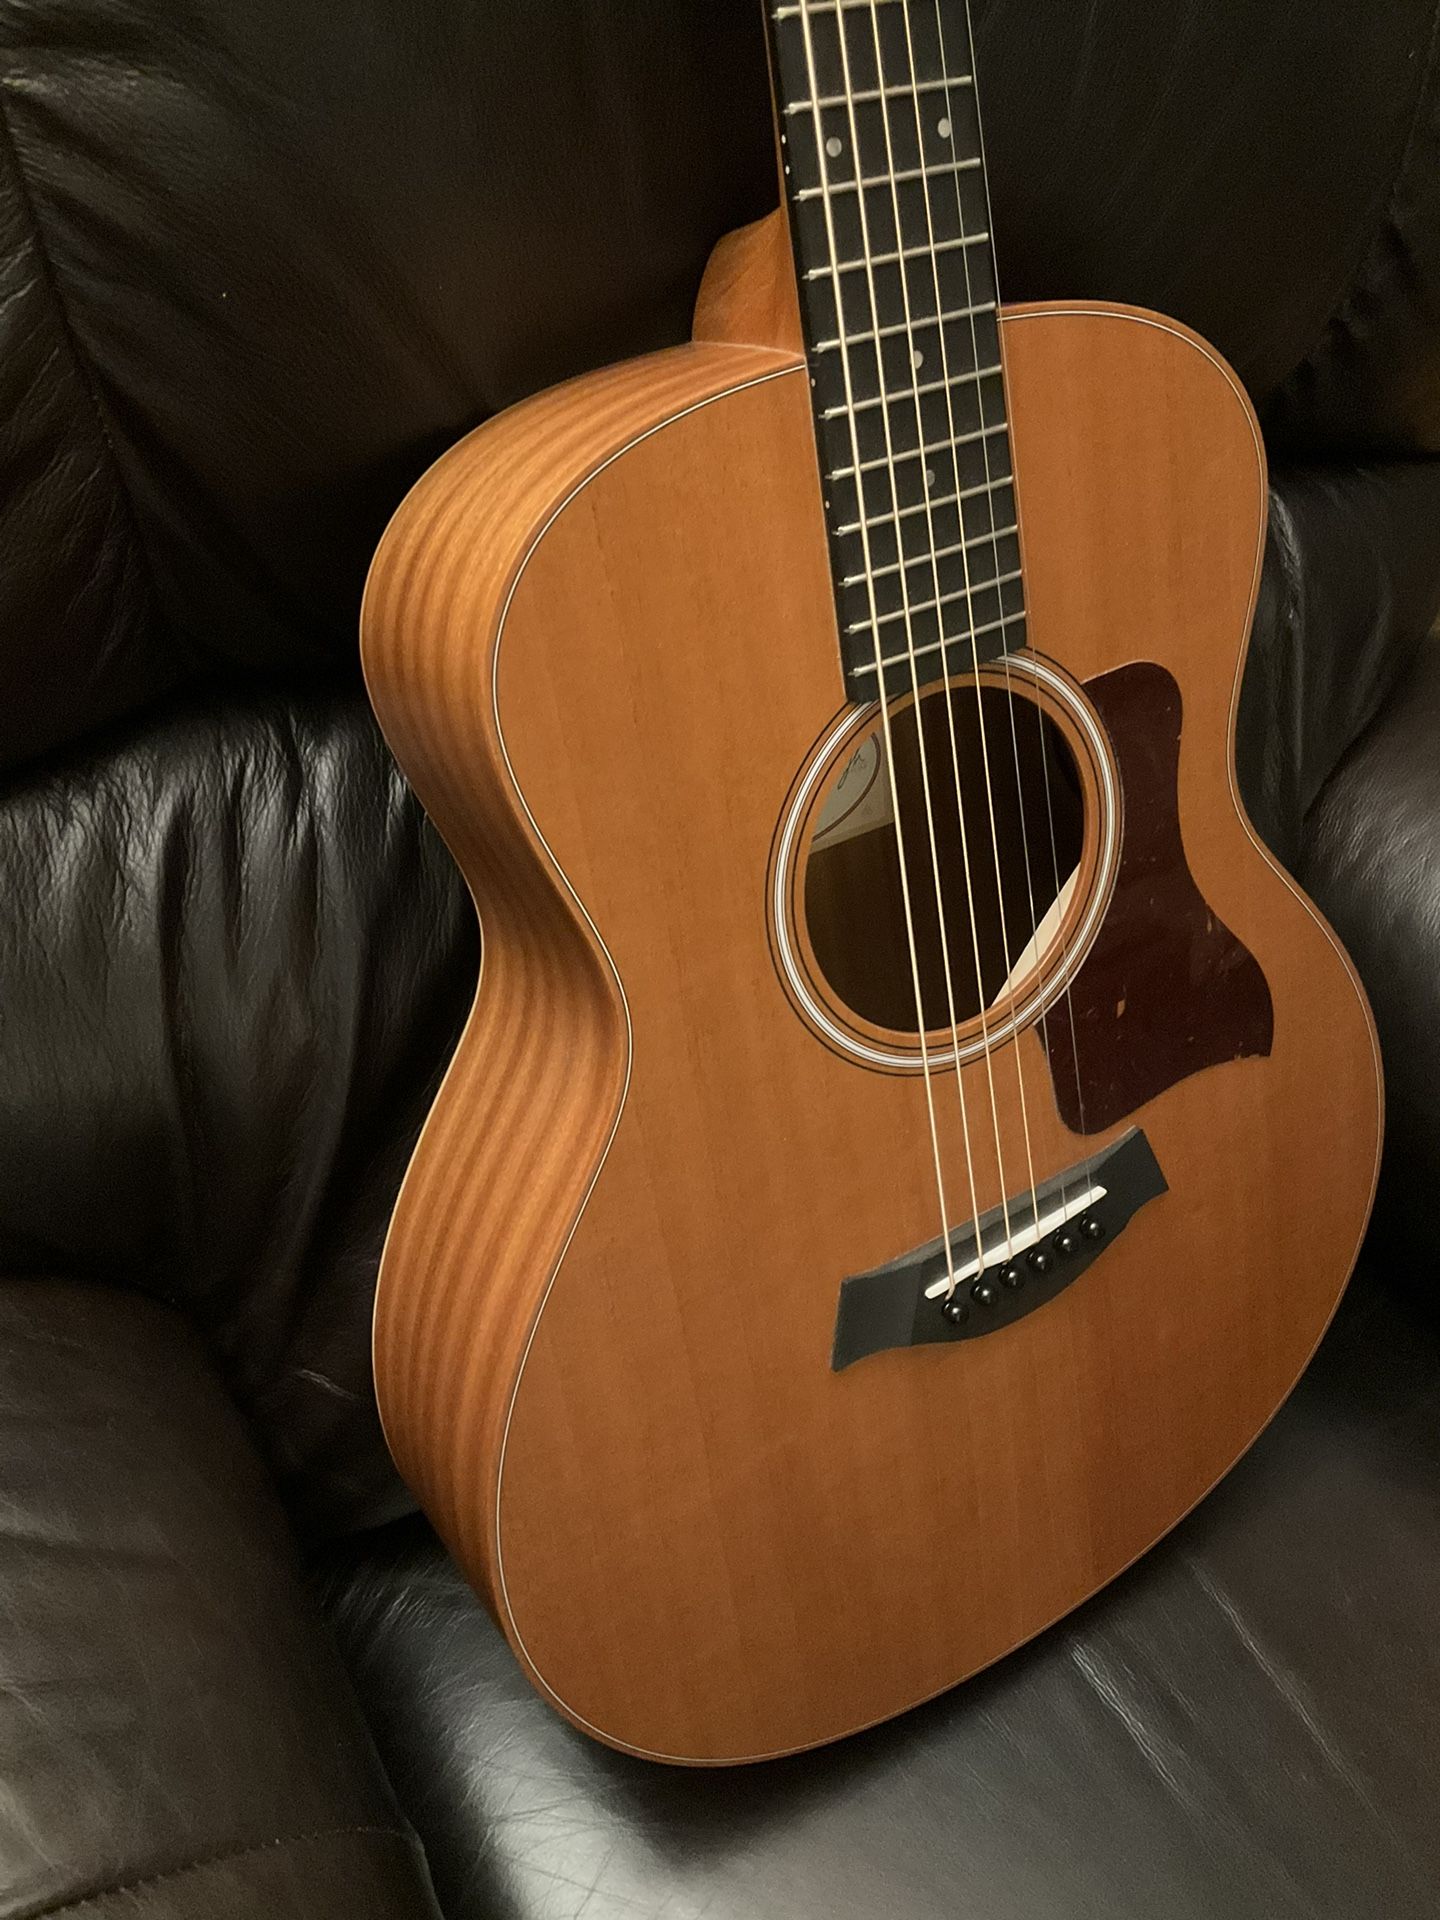 2022 Taylor GS Mini Mahogany Acoustic Guitar - Like New